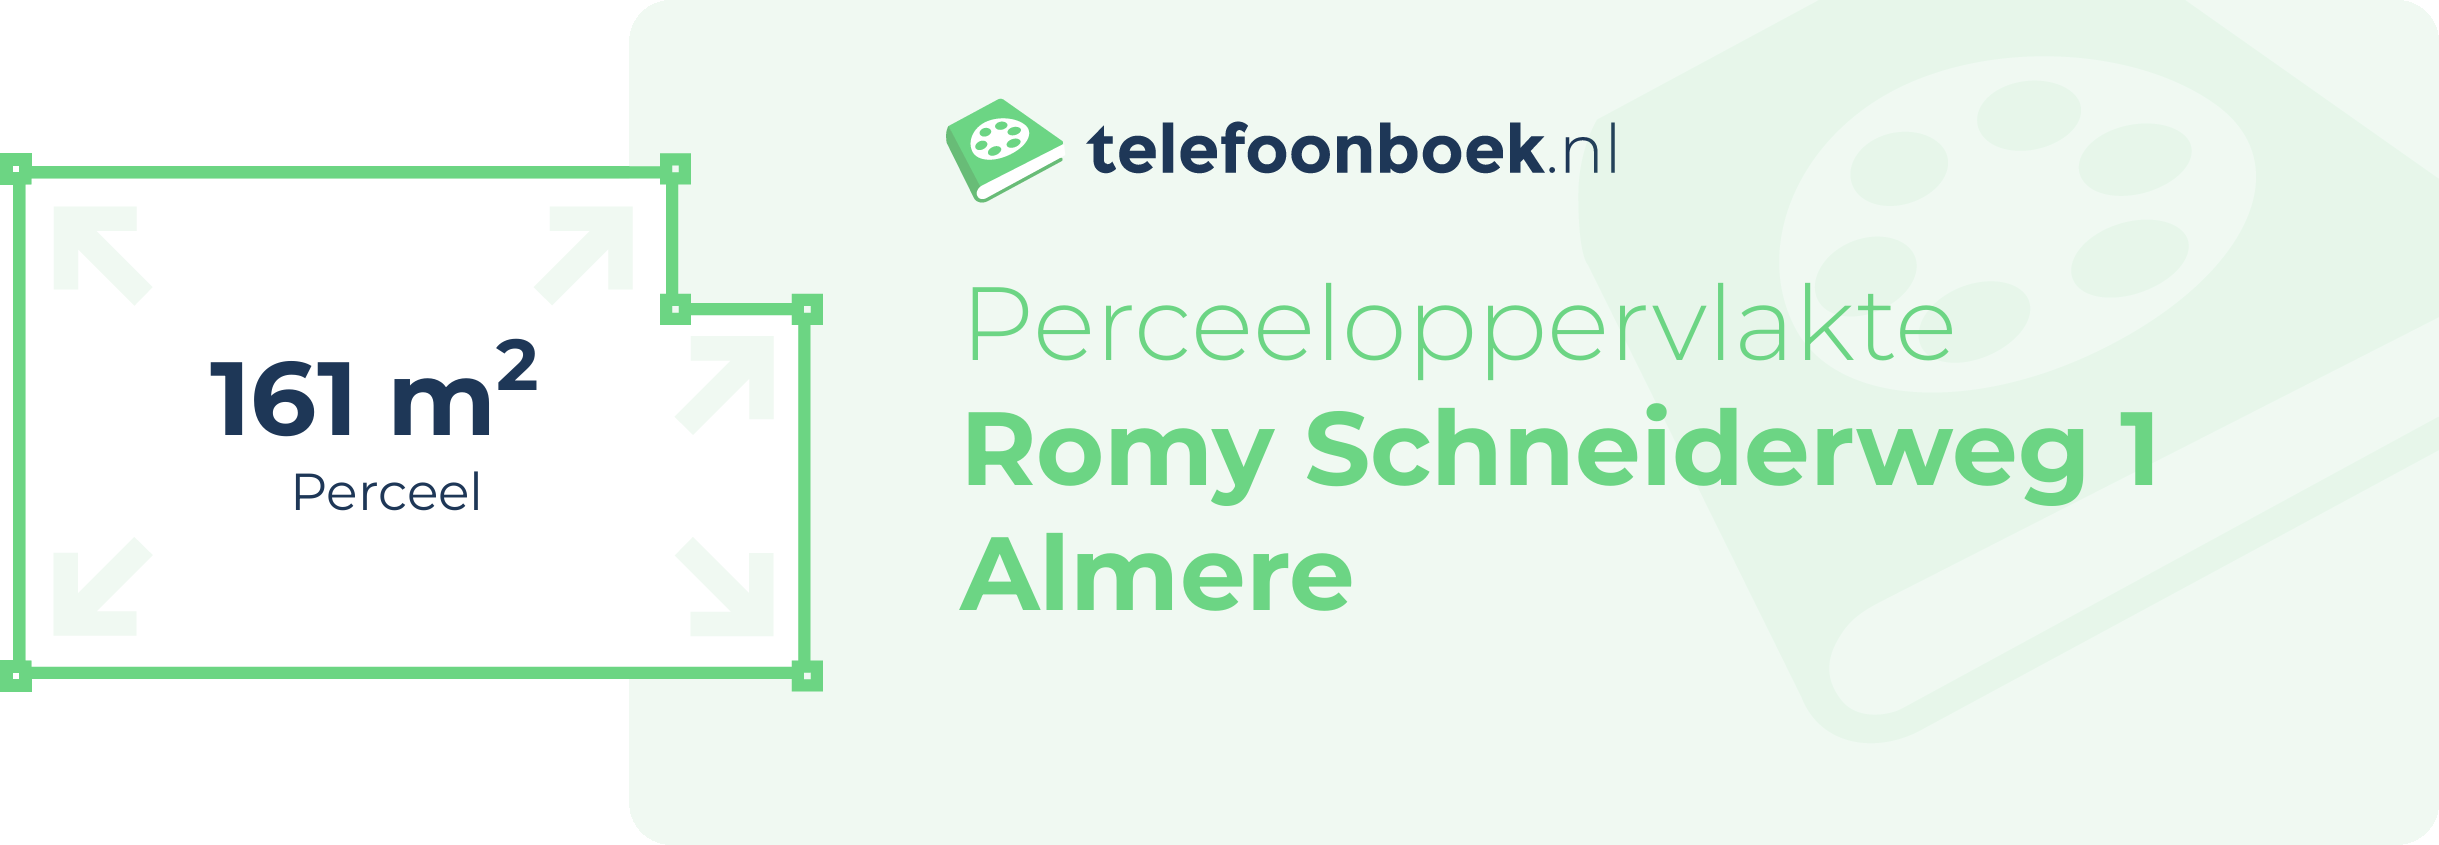 Perceeloppervlakte Romy Schneiderweg 1 Almere